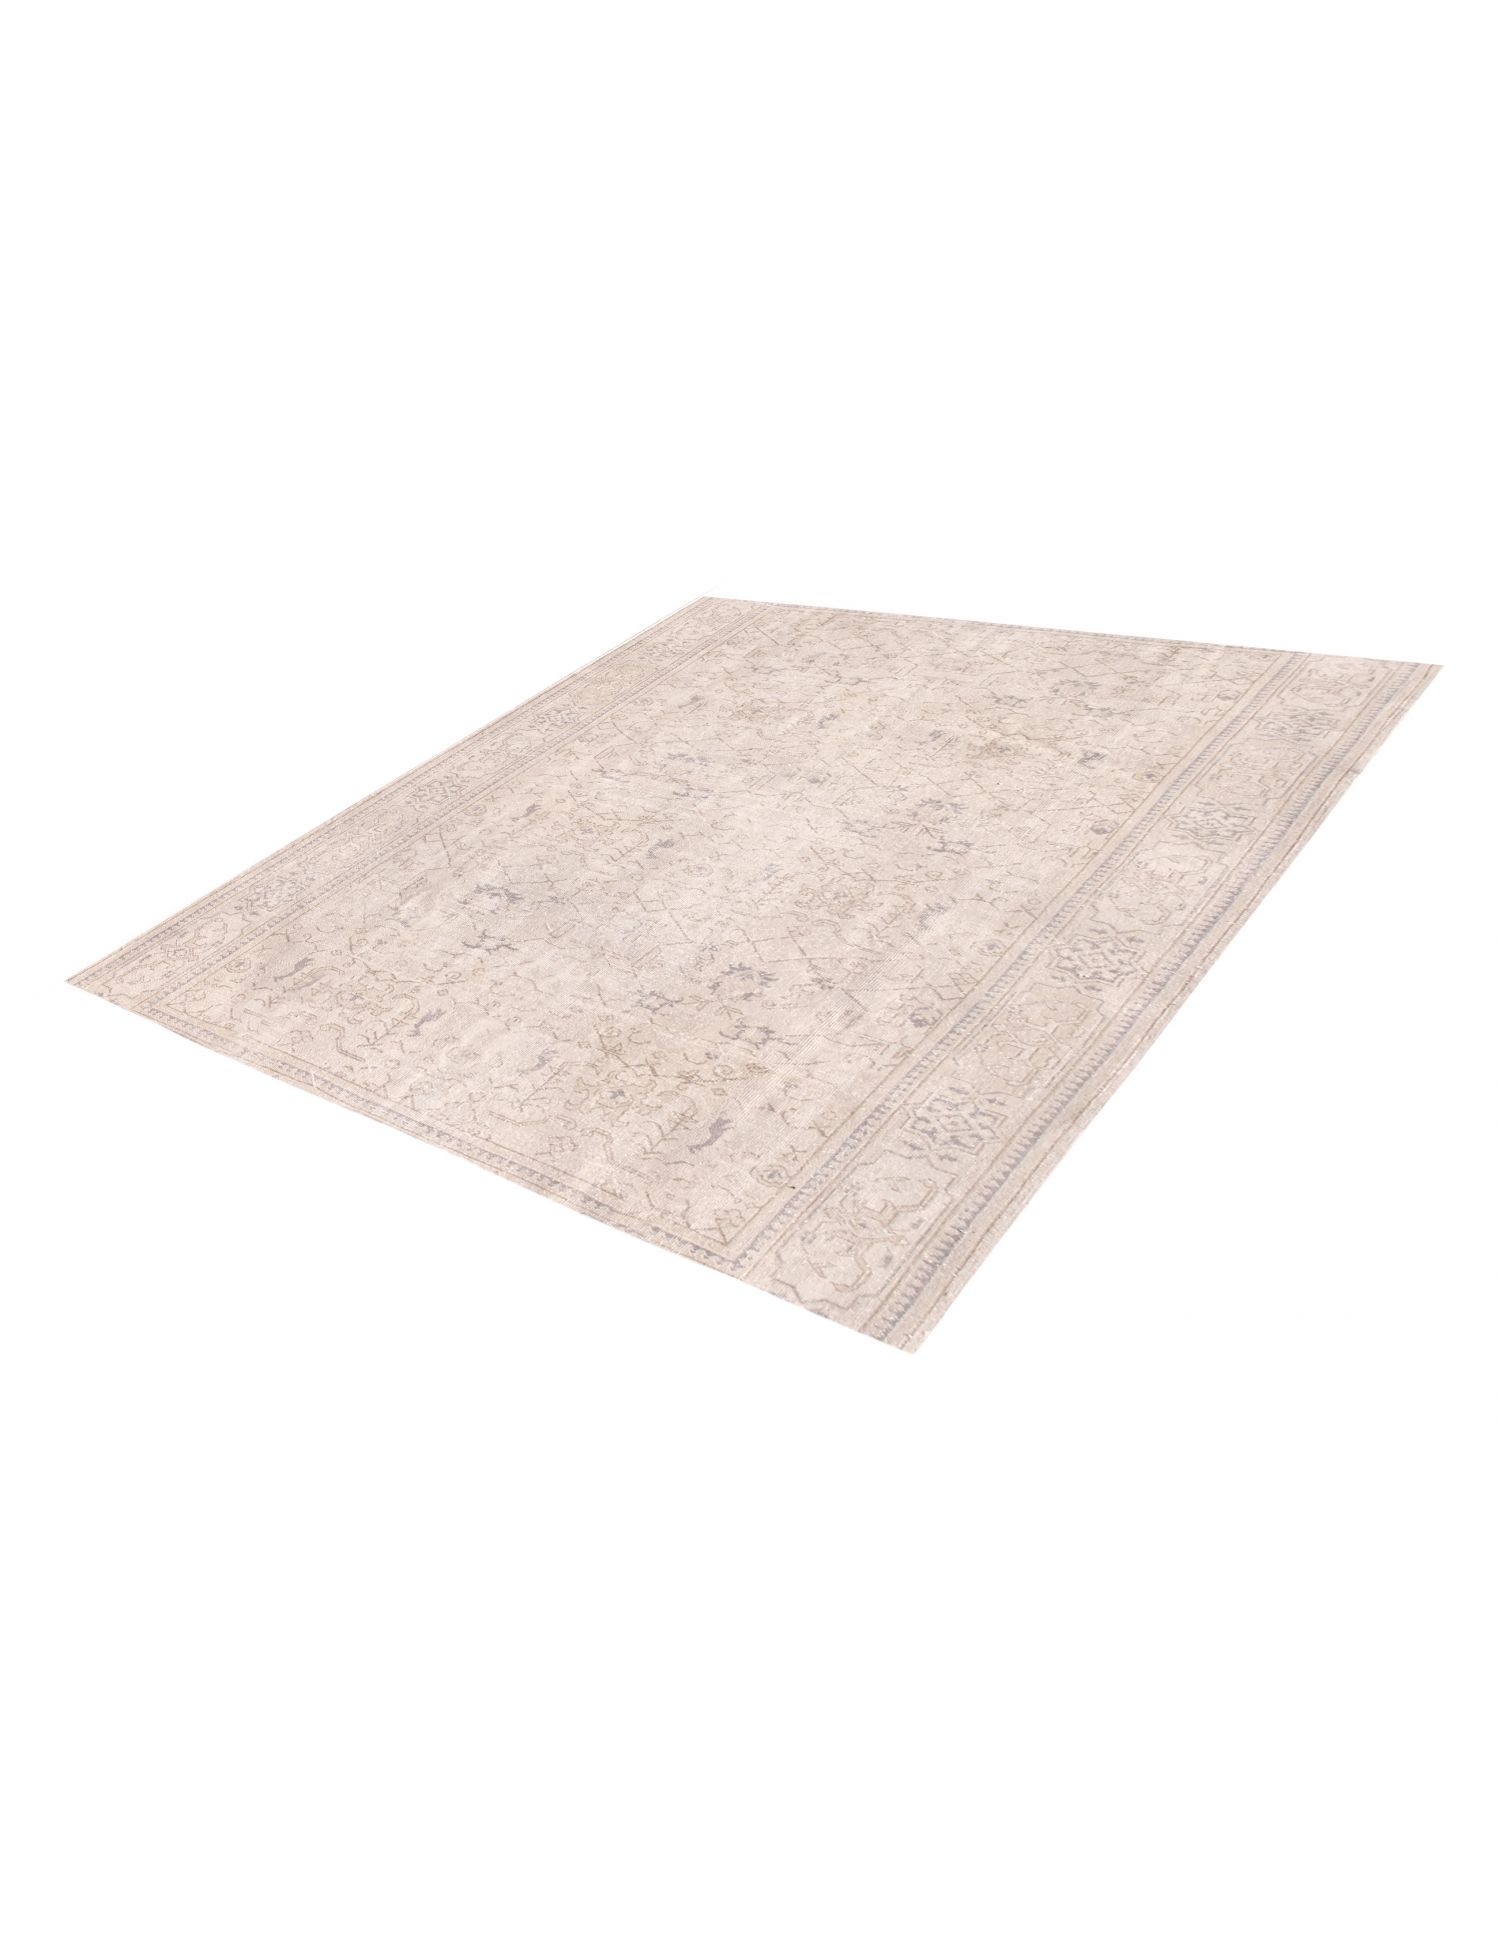 Quadrat  Vintage Teppich  beige <br/>170 x 170 cm